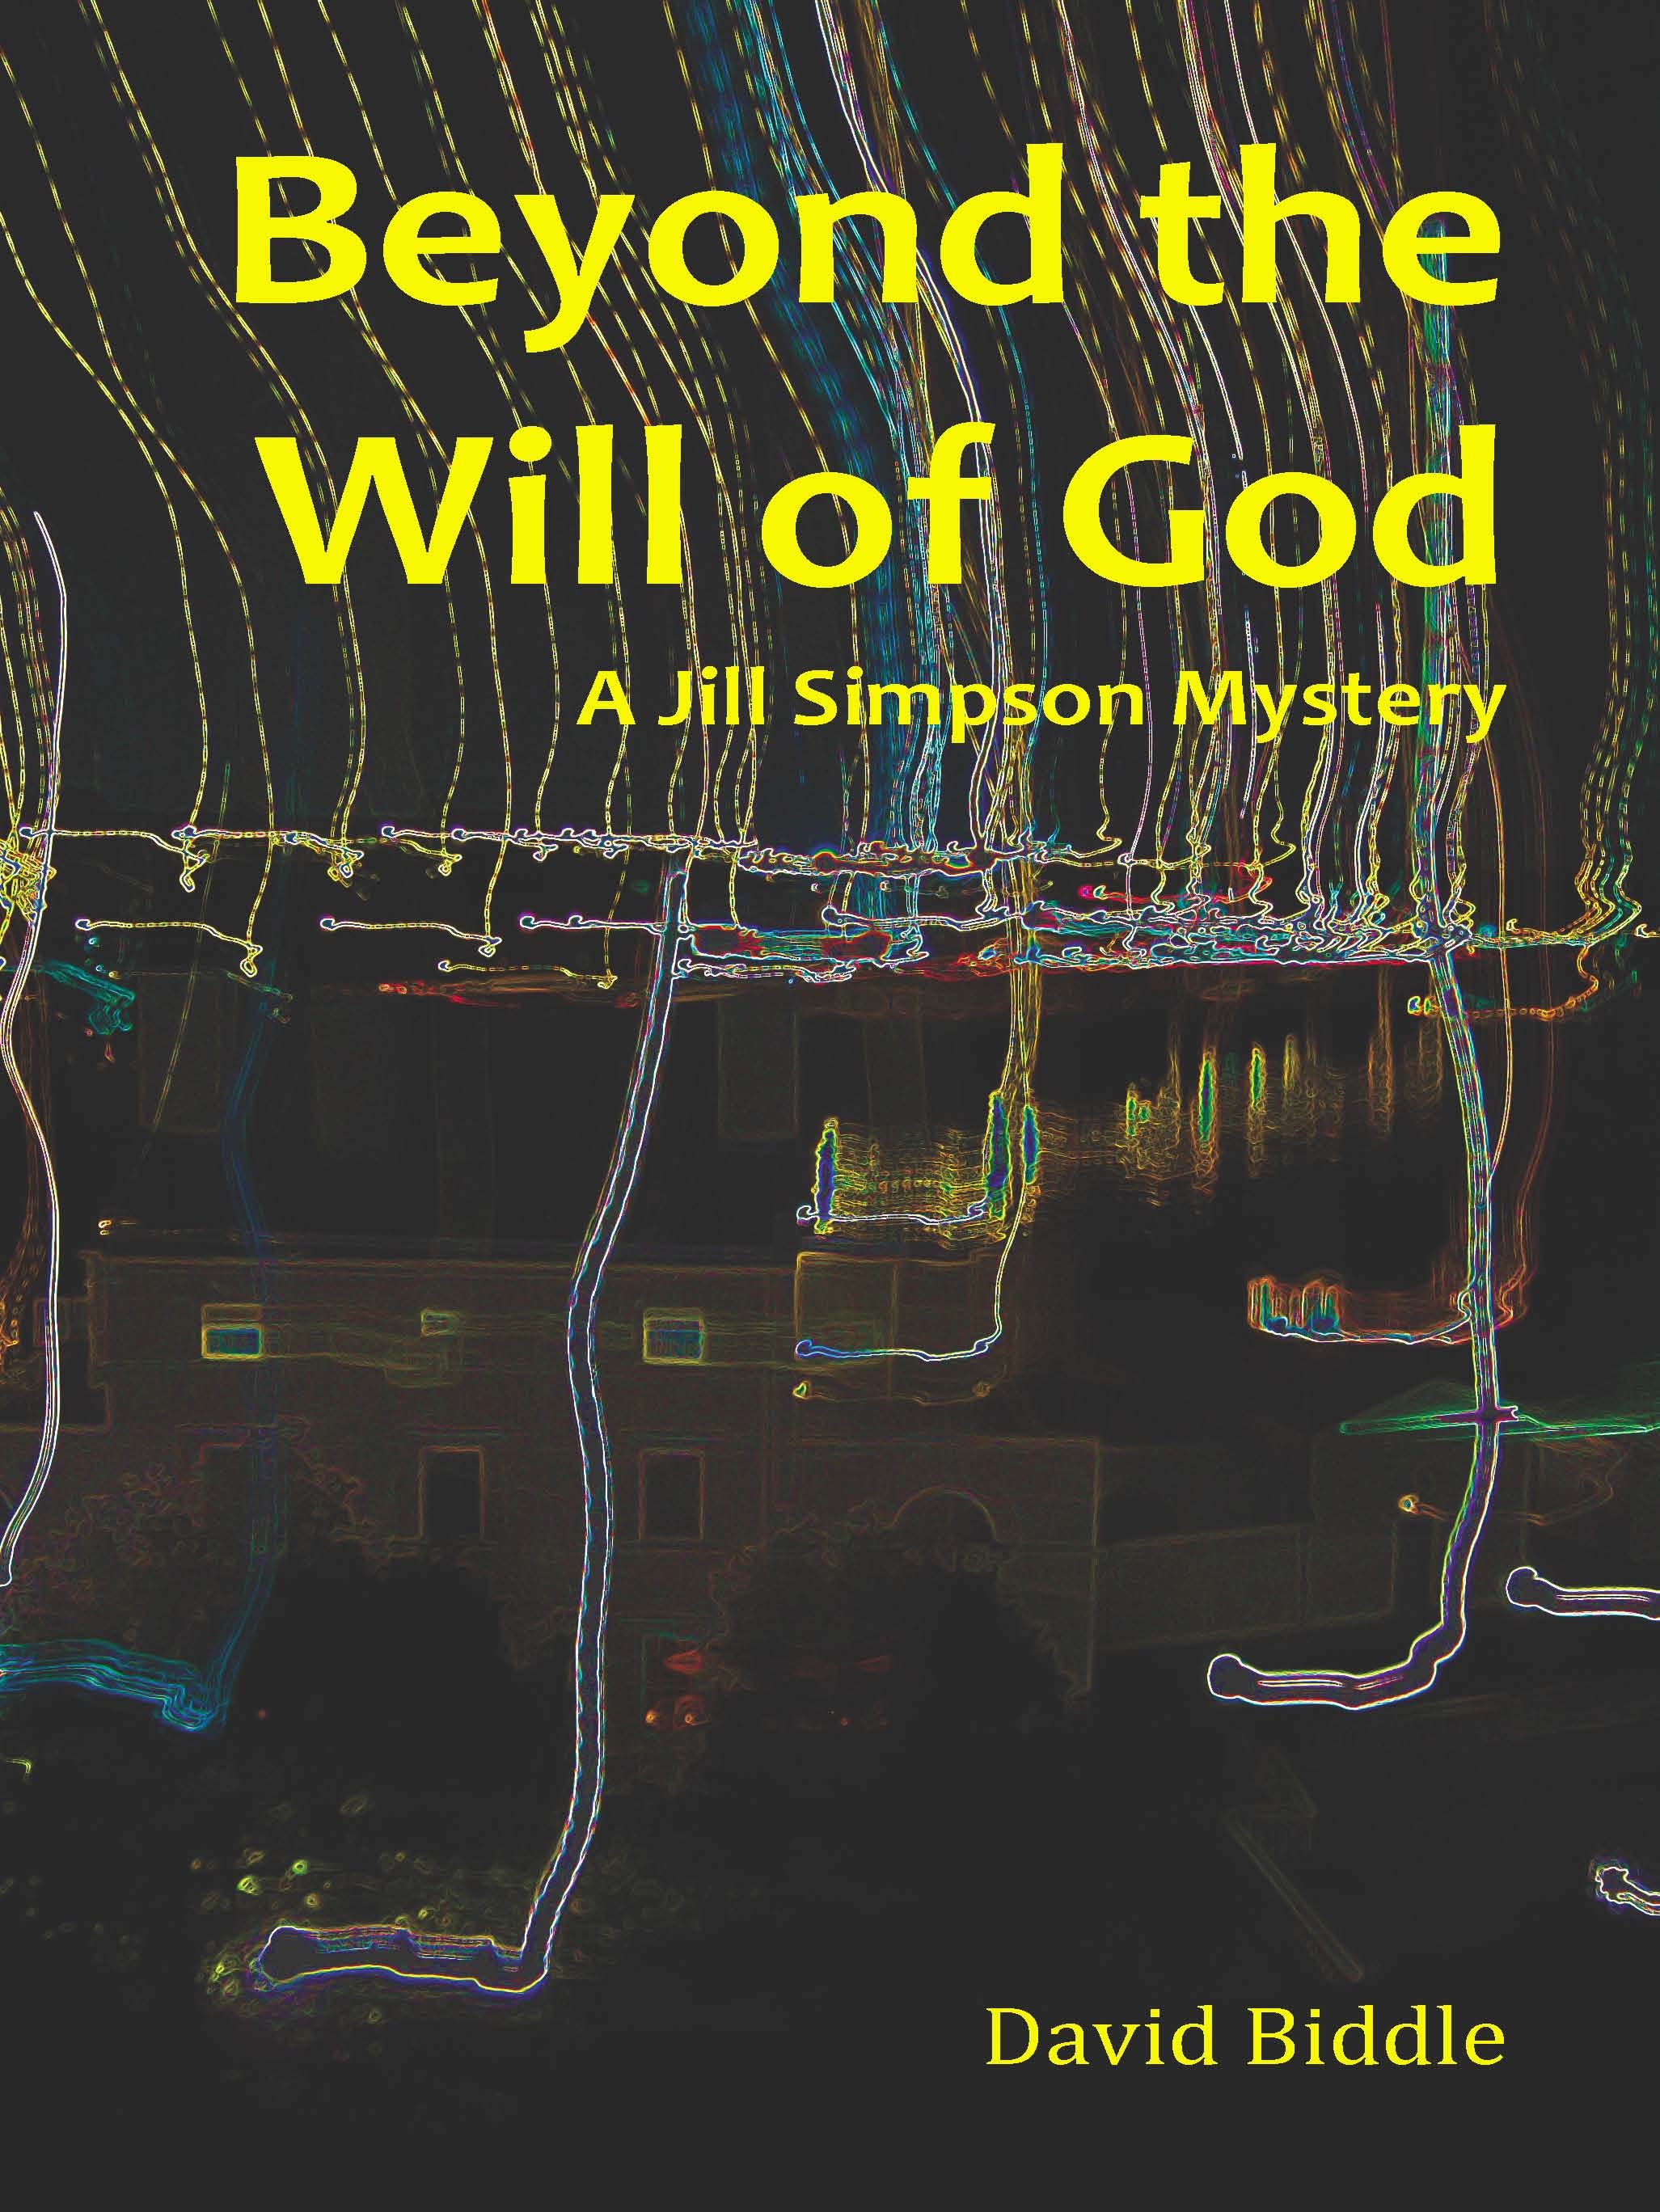 Sneak Peek: Beyond the Will of God by David Biddle